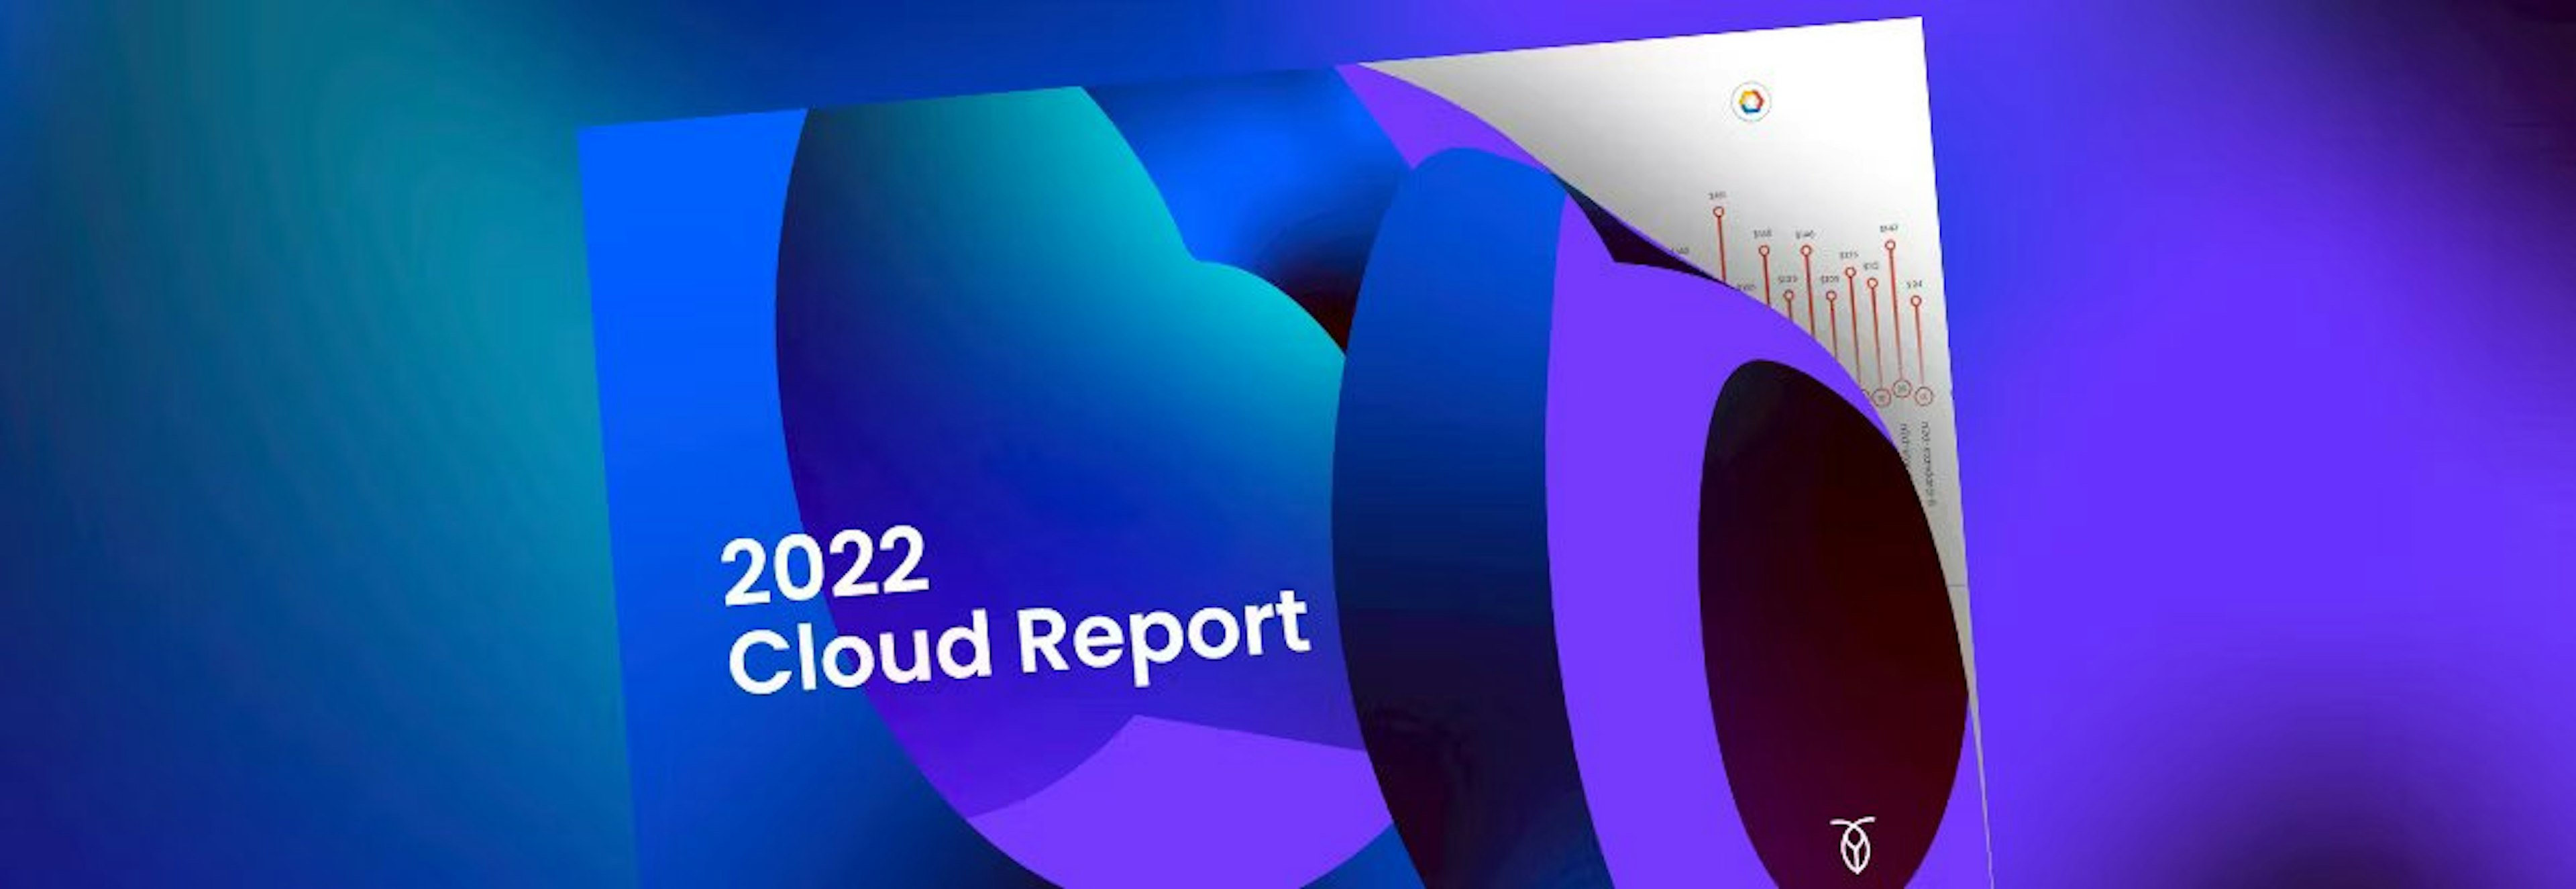 2022-cloud-report-launch